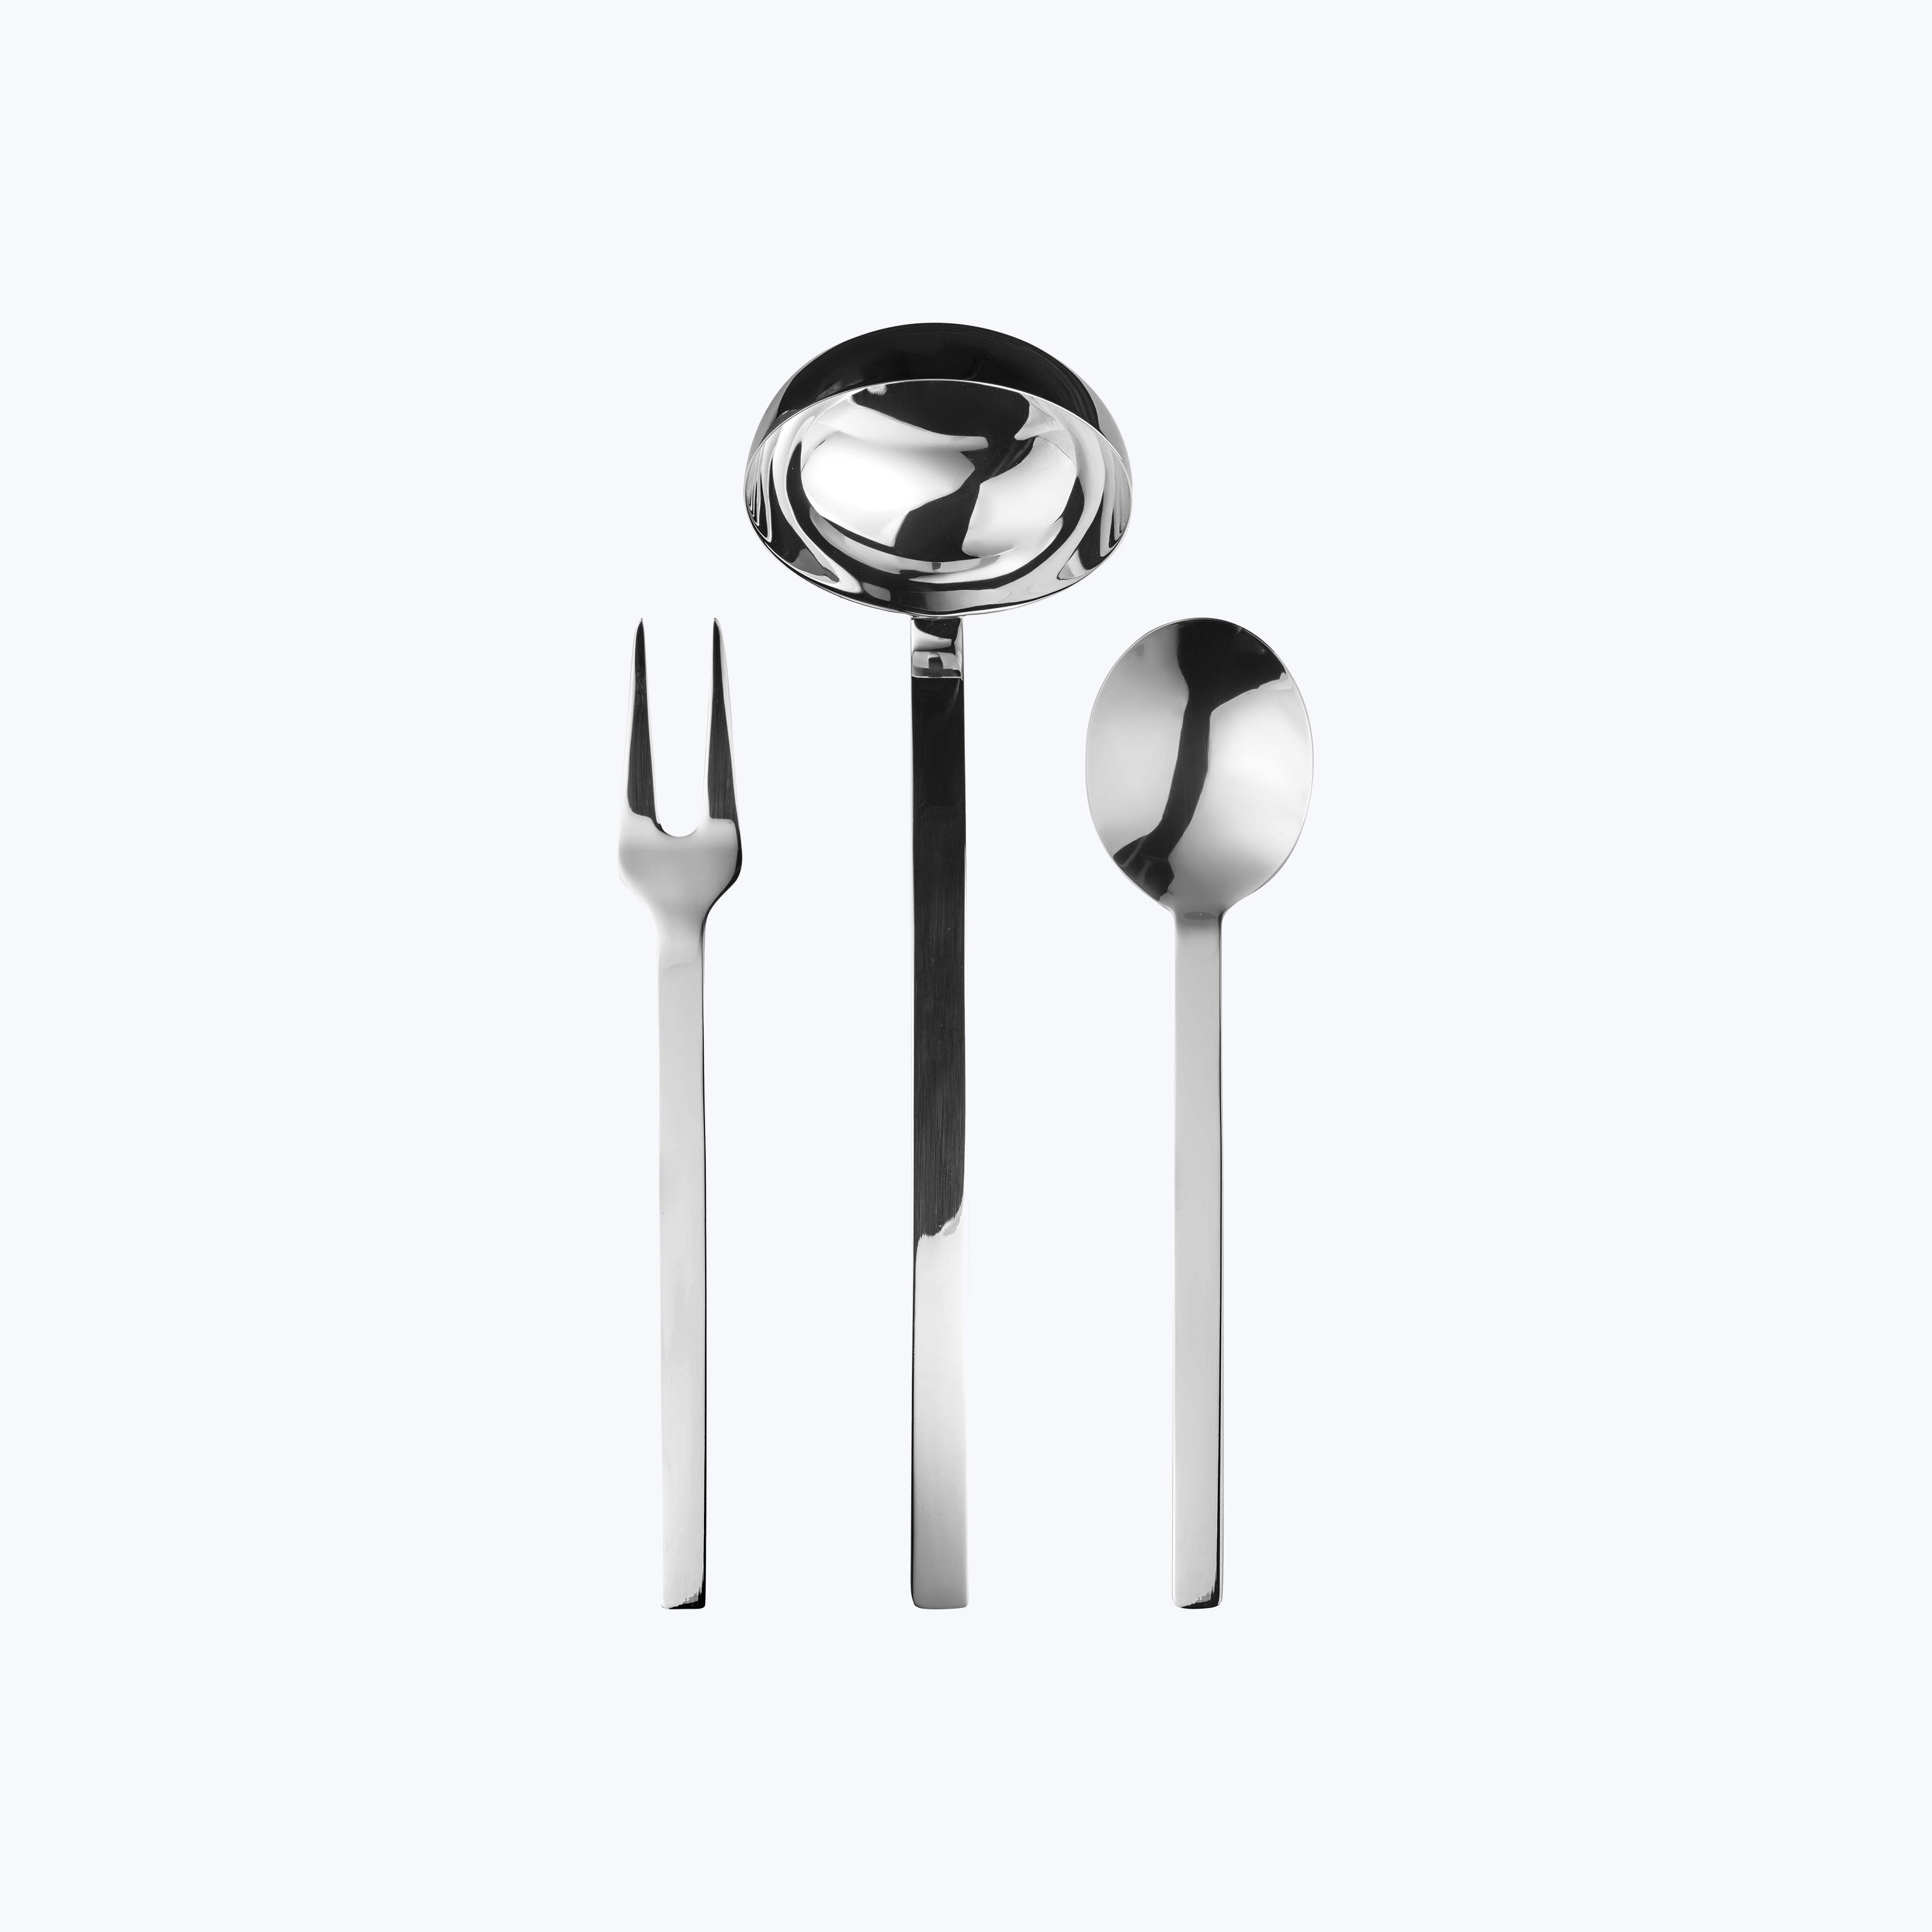 Stile Serveware, Mirror Finish Stainless Steel / 3 Piece Serving Set (Fork, Spoon, Ladle)